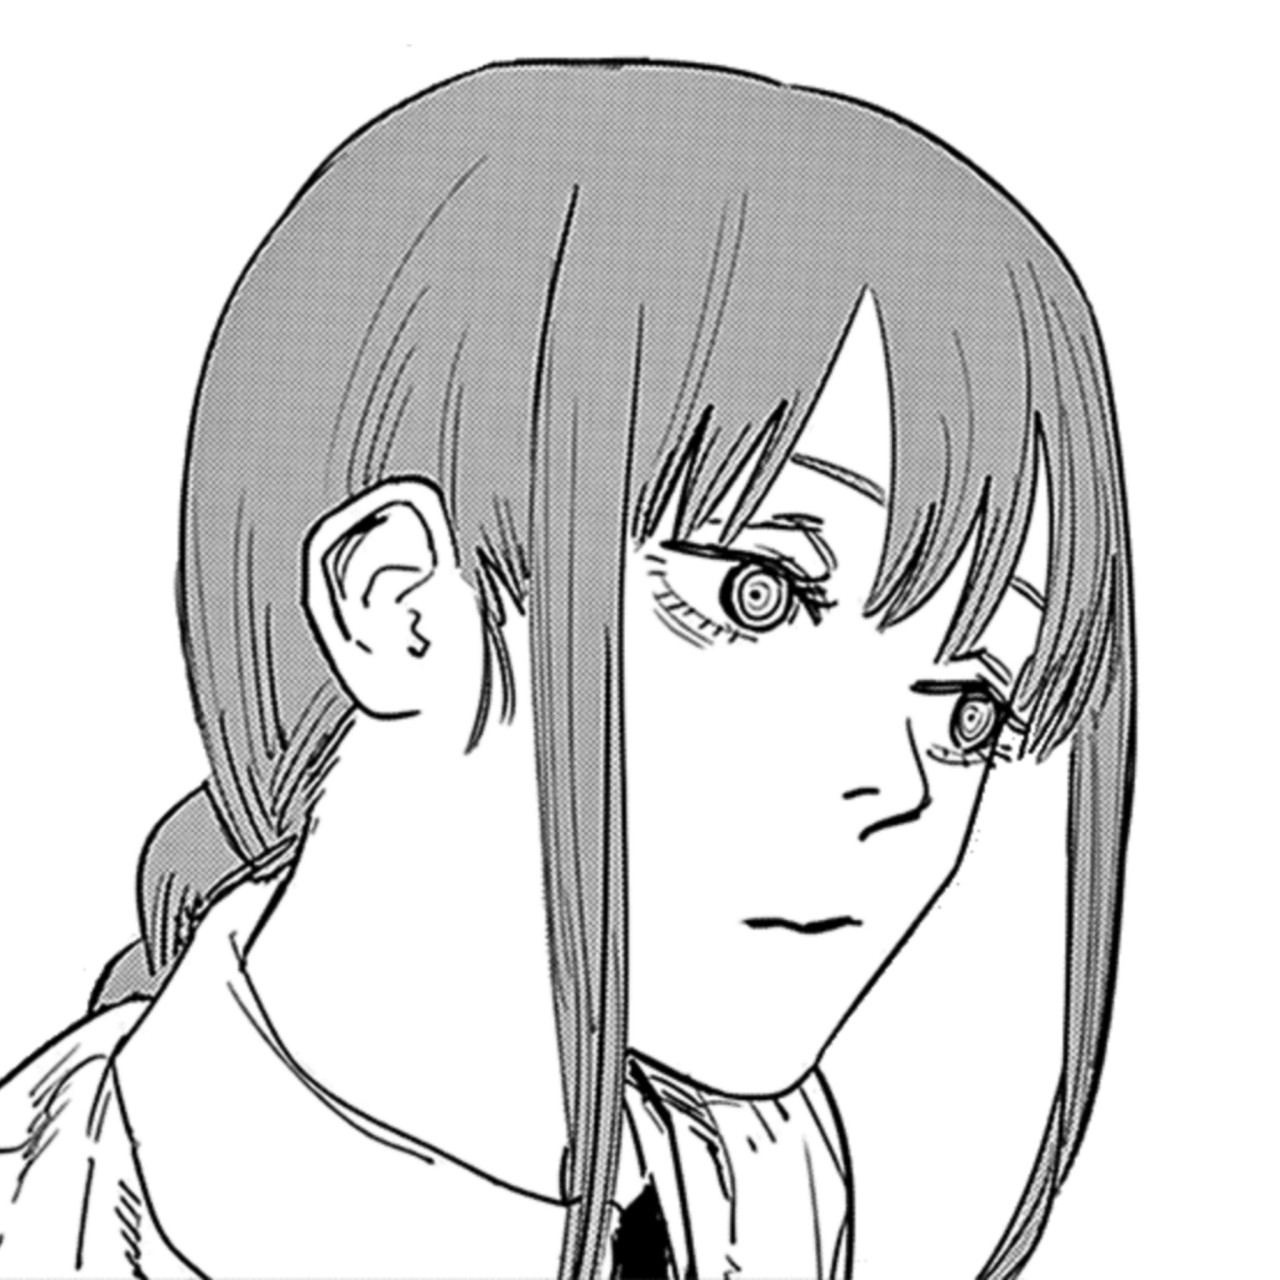 Akaonigami's avatar